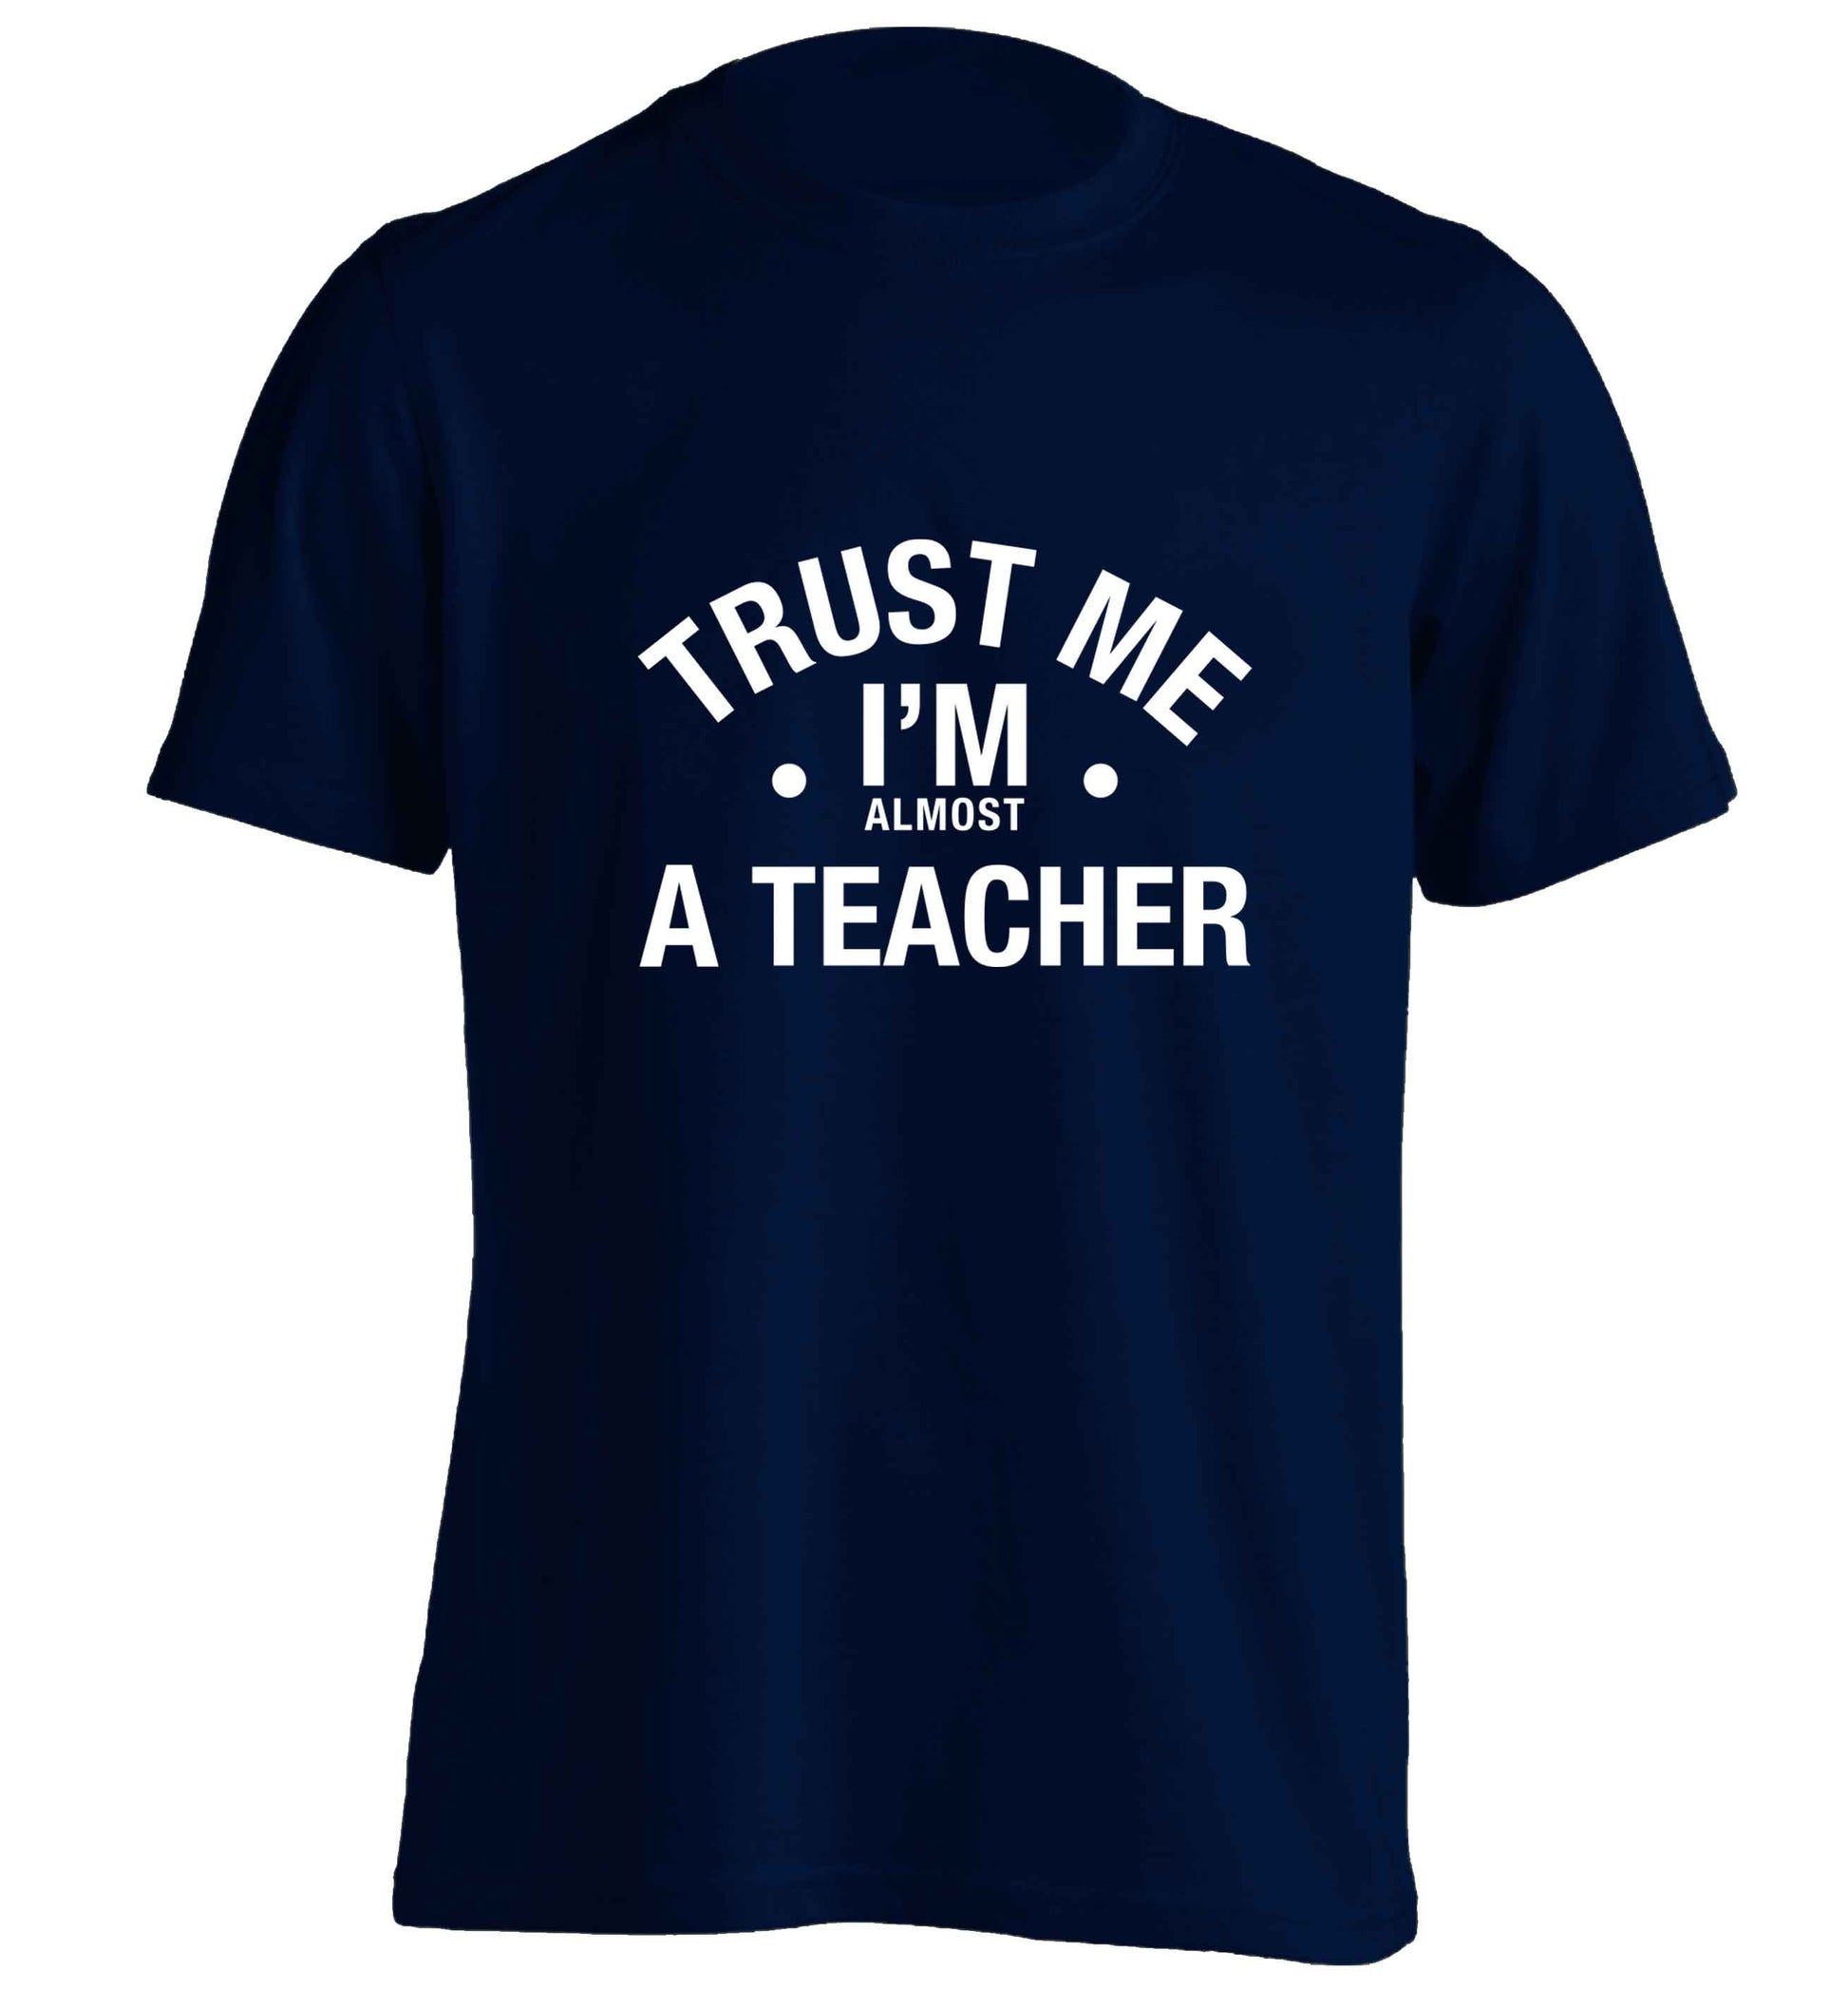 Trust me I'm almost a teacher adults unisex navy Tshirt 2XL